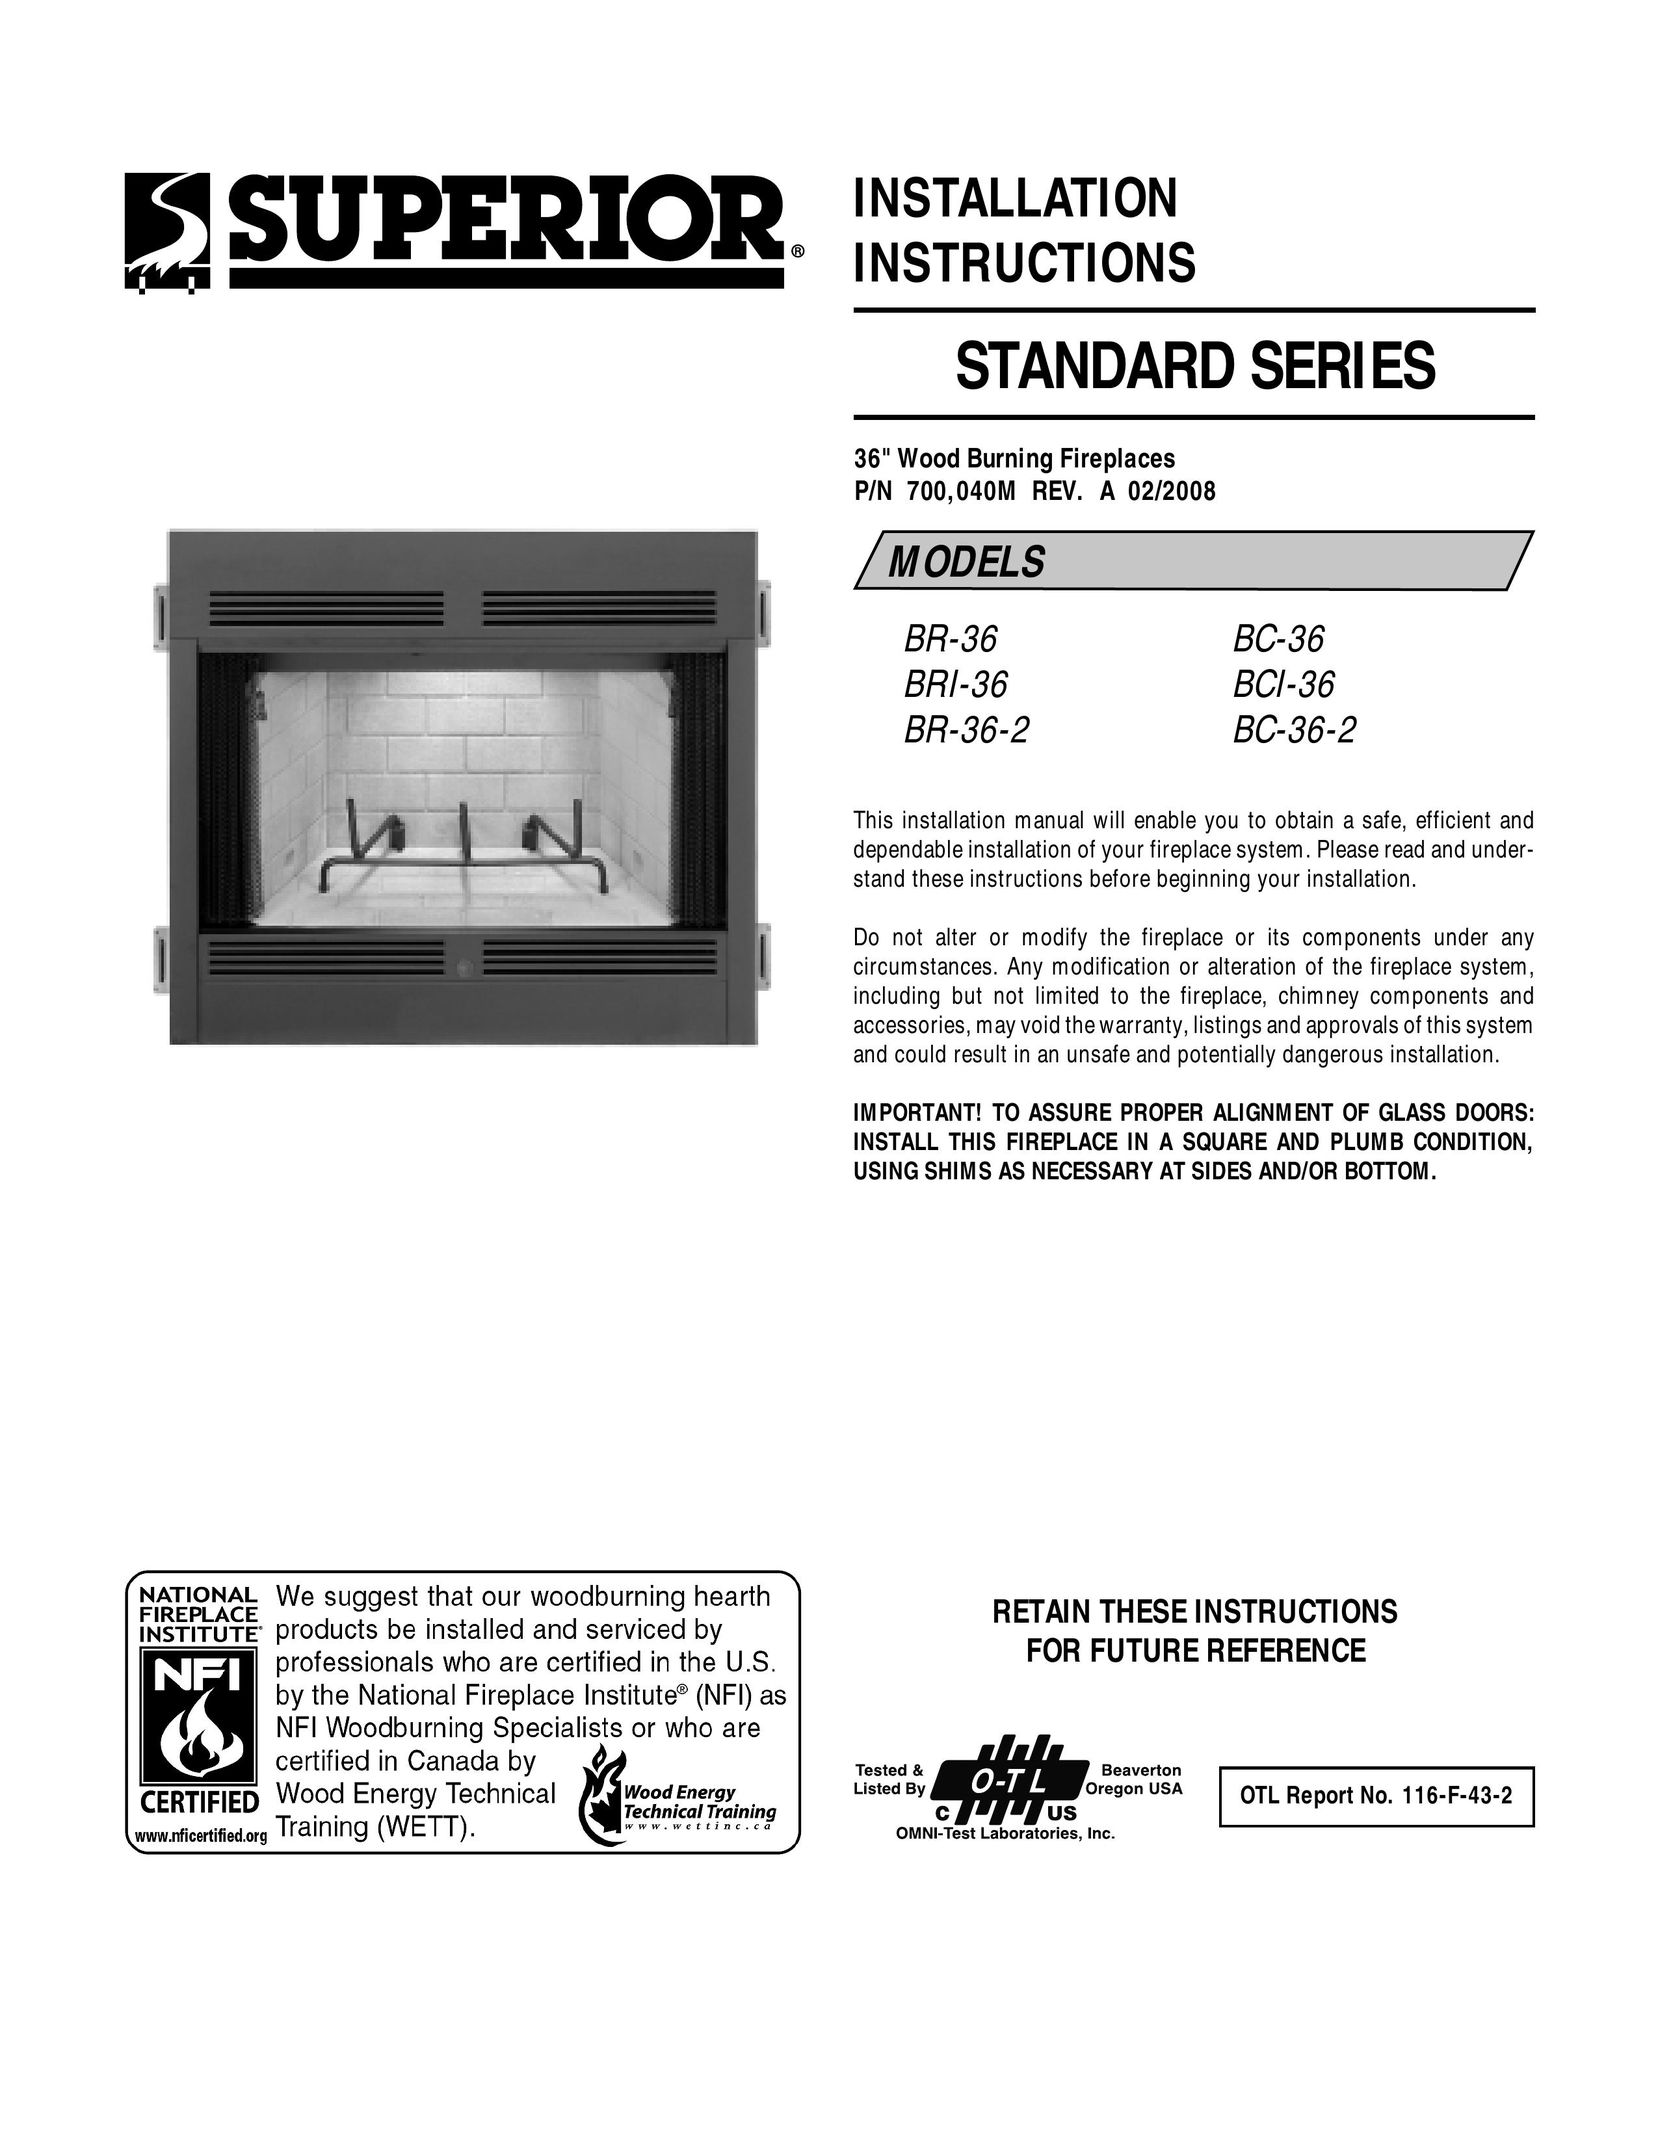 Superior BCI-36 Indoor Fireplace User Manual